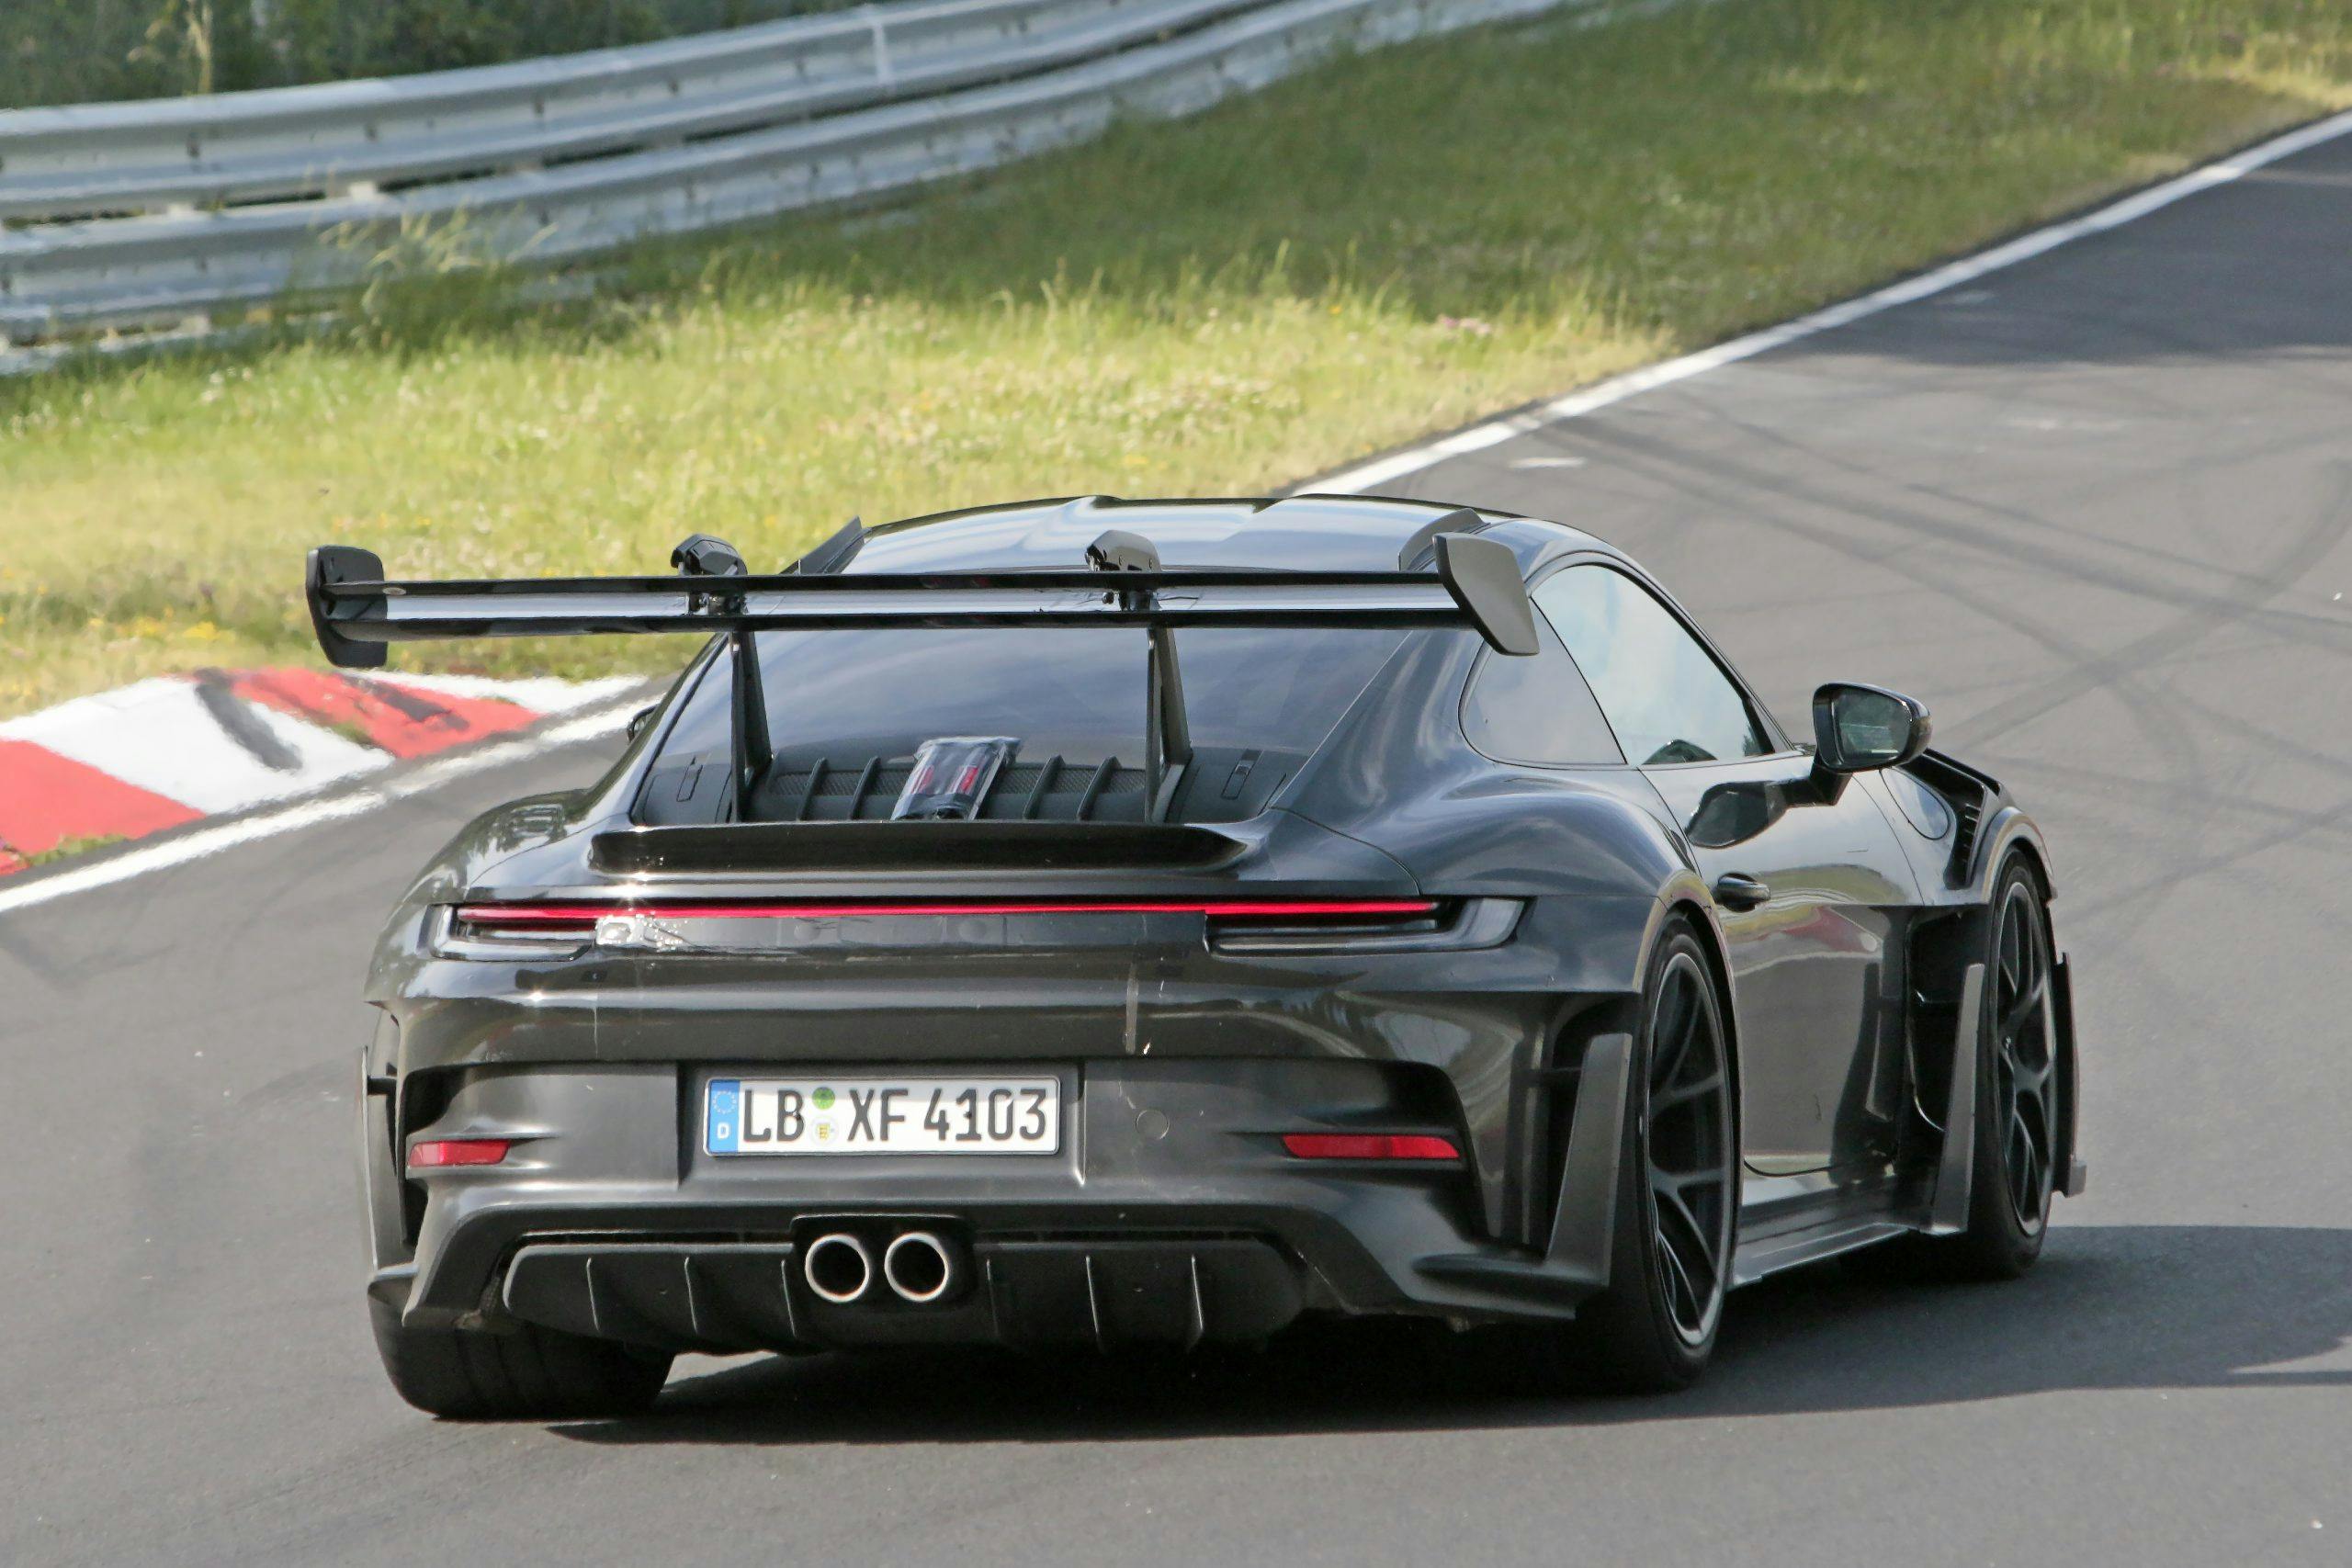 Porsche 911 GT3 RS Spy Shots exterior rear end close